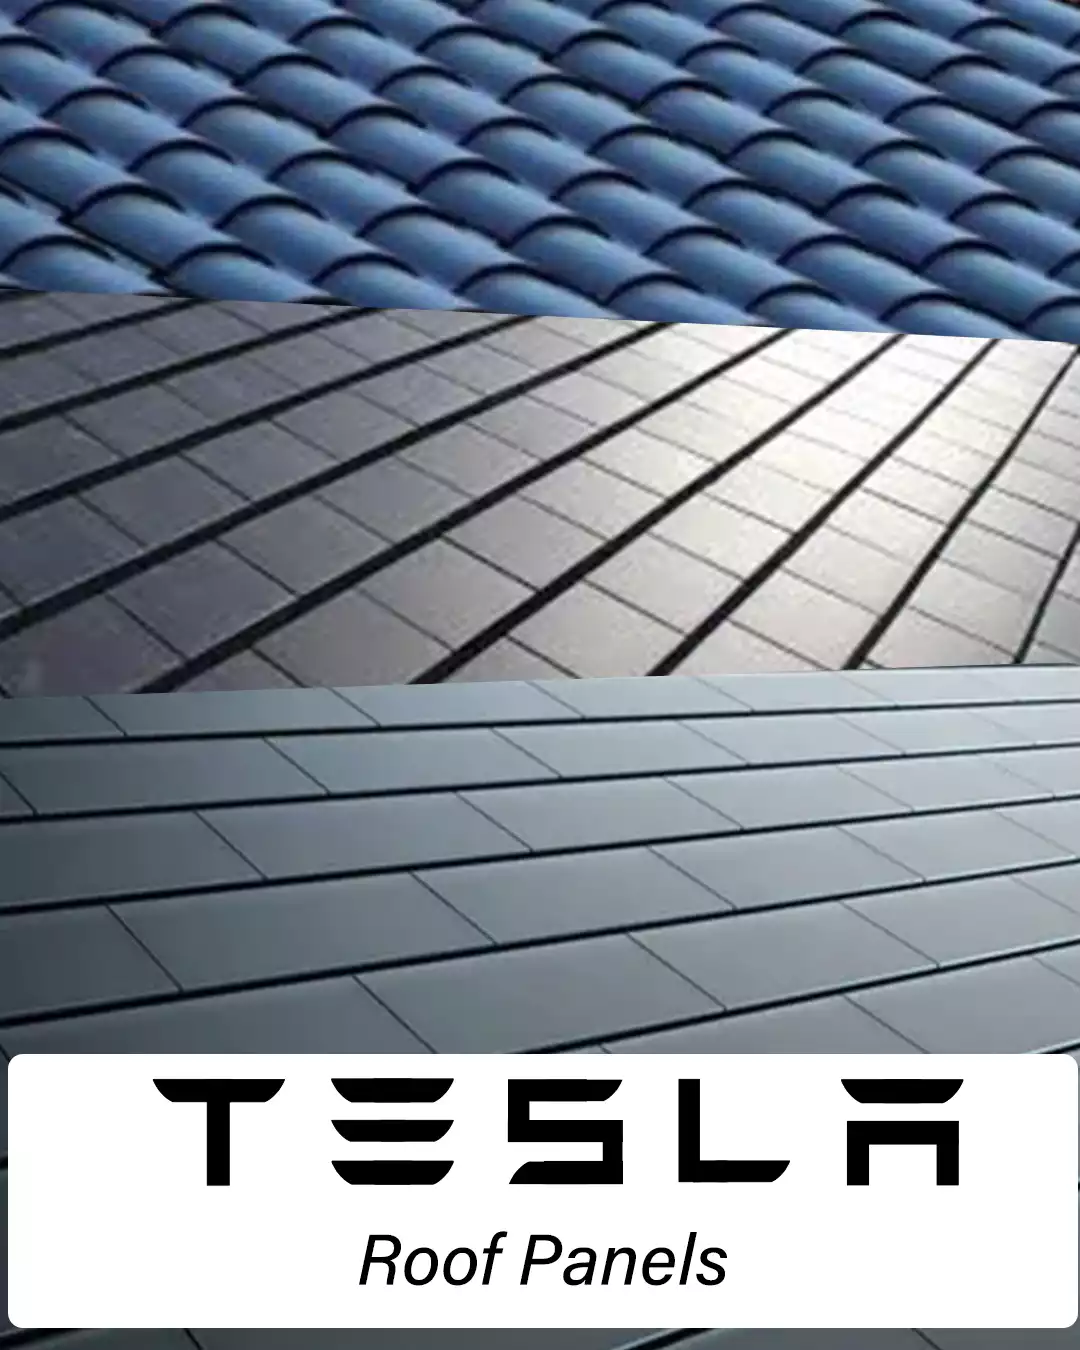 3 Types of Tesla Roof Panels